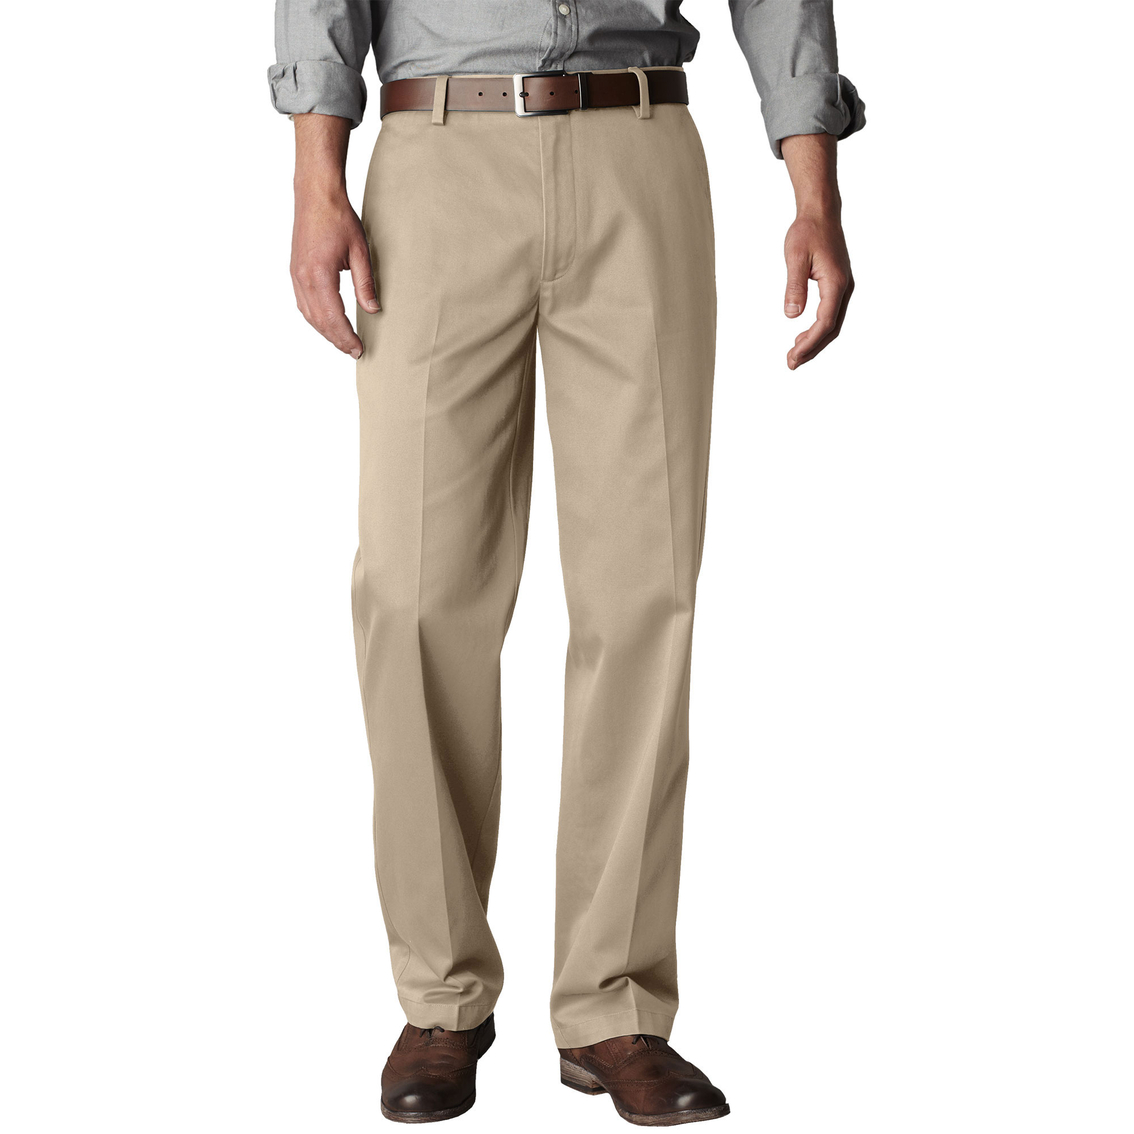 Dockers Signature D2 Khaki Straight Fit Flat Front Pants | Pants ...